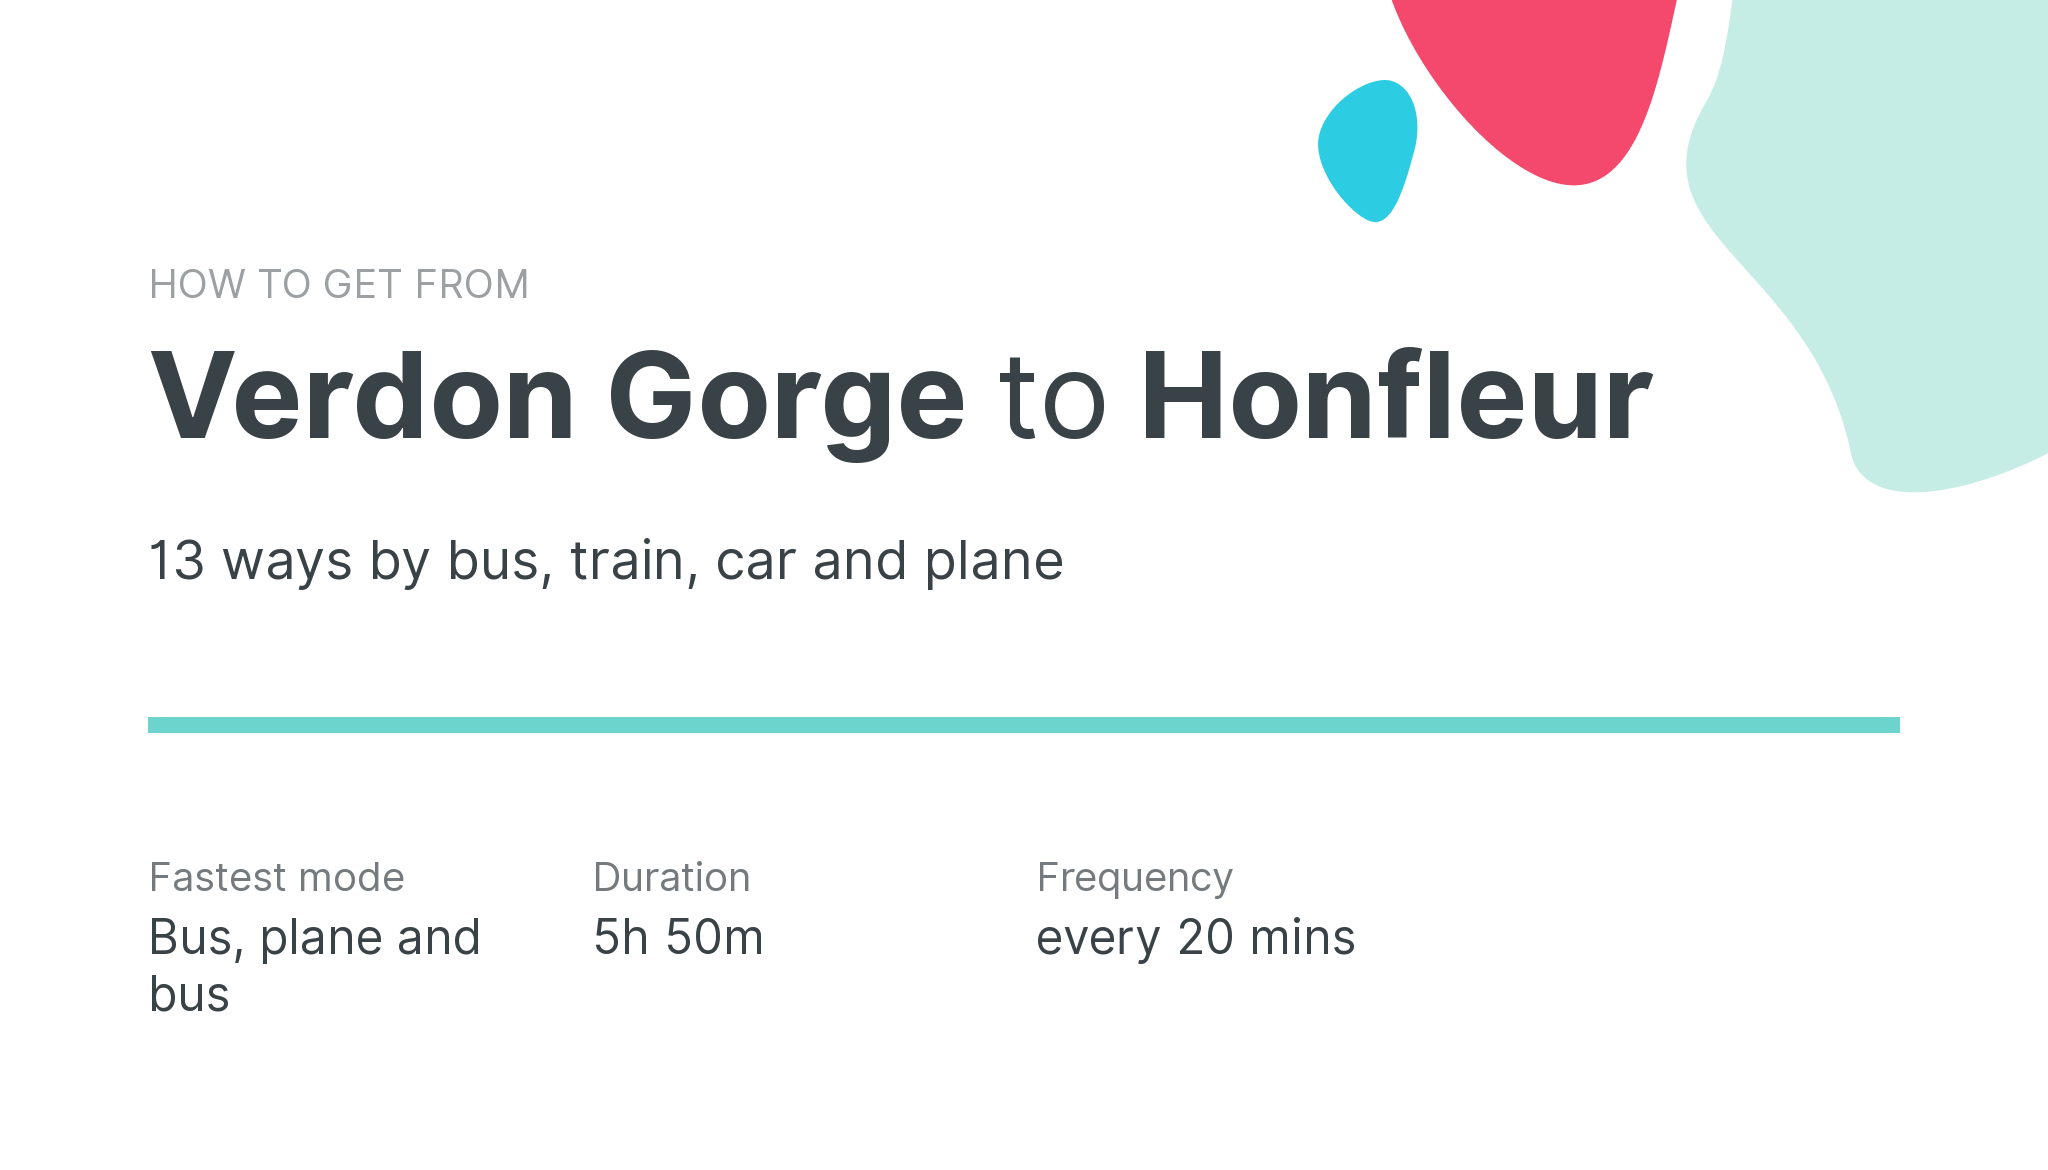 How do I get from Verdon Gorge to Honfleur